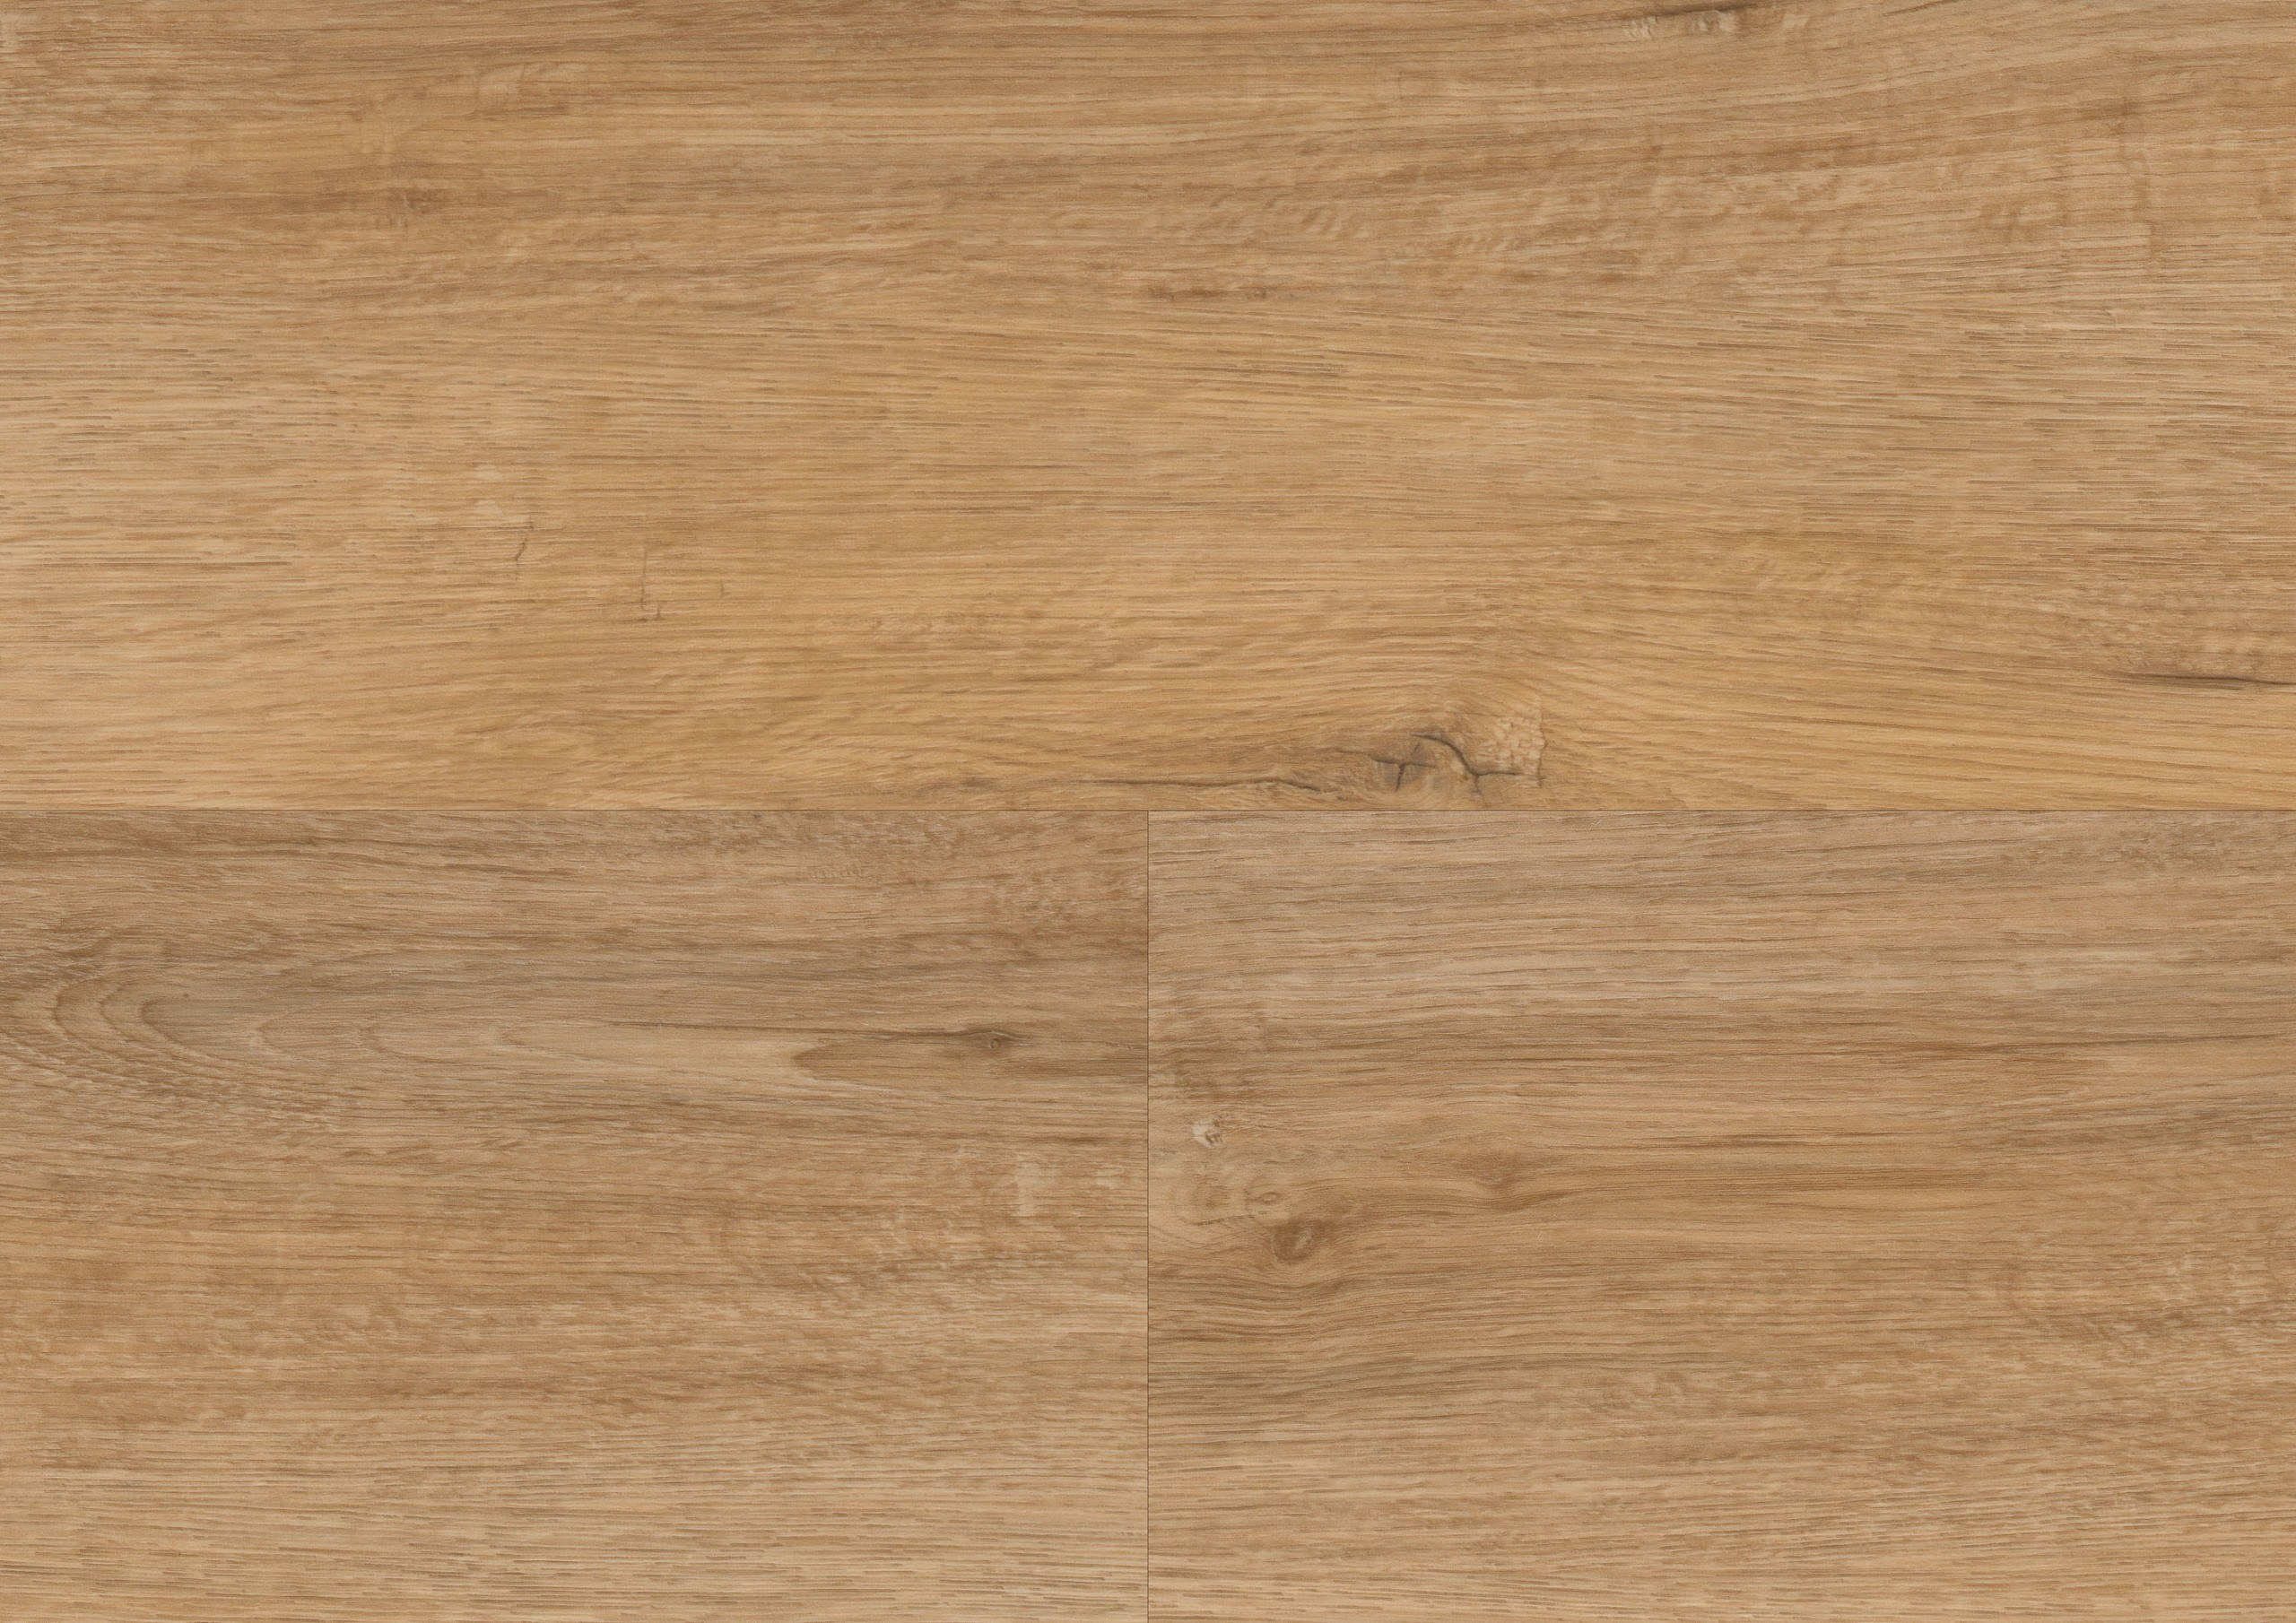 Wineo 600 wood Designboden Art. RLC184W6 Klickvinyl  Warm Place 5 mm